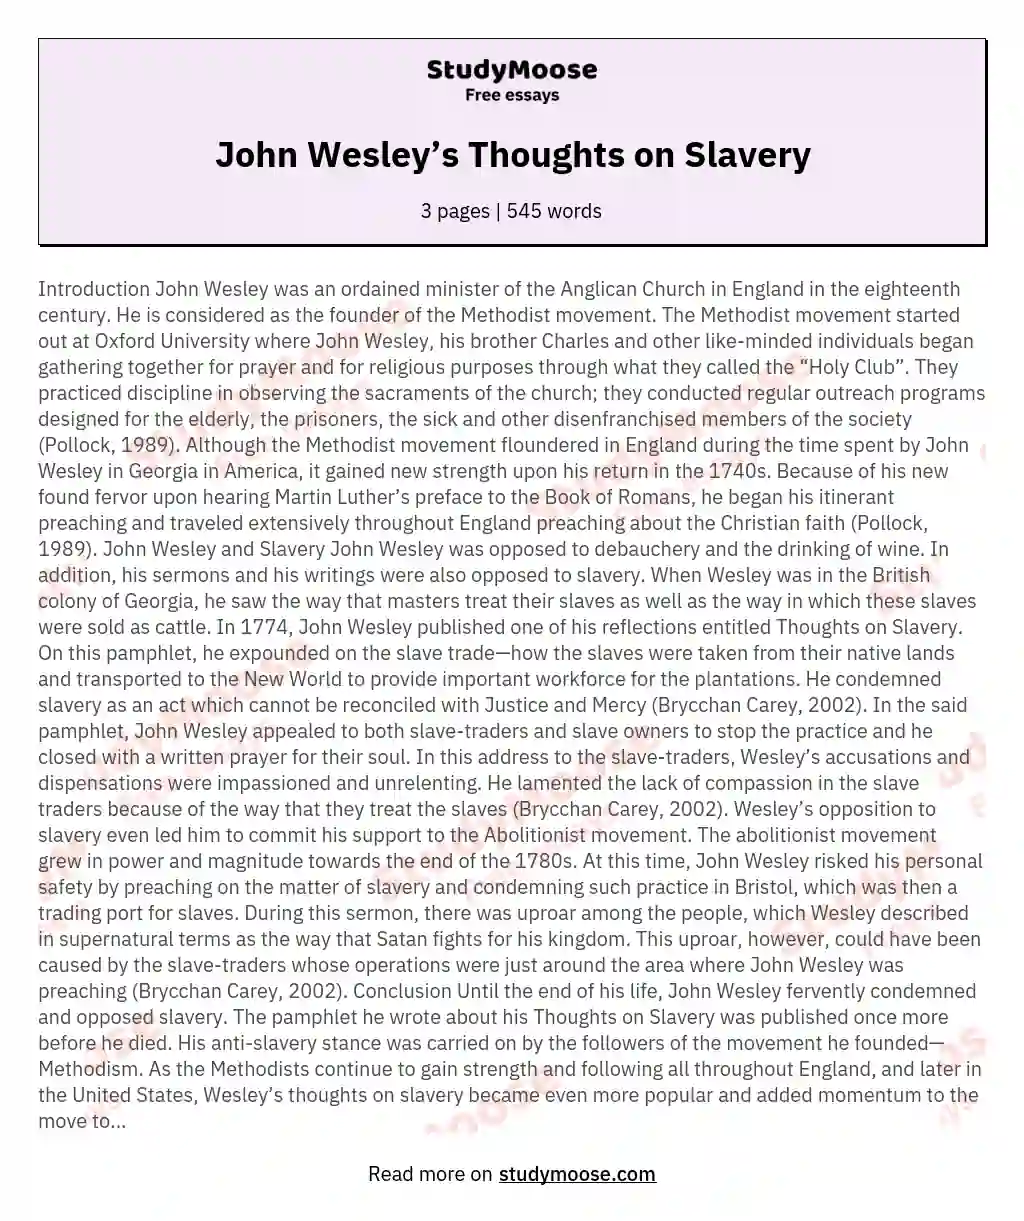 John Wesley’s Thoughts on Slavery